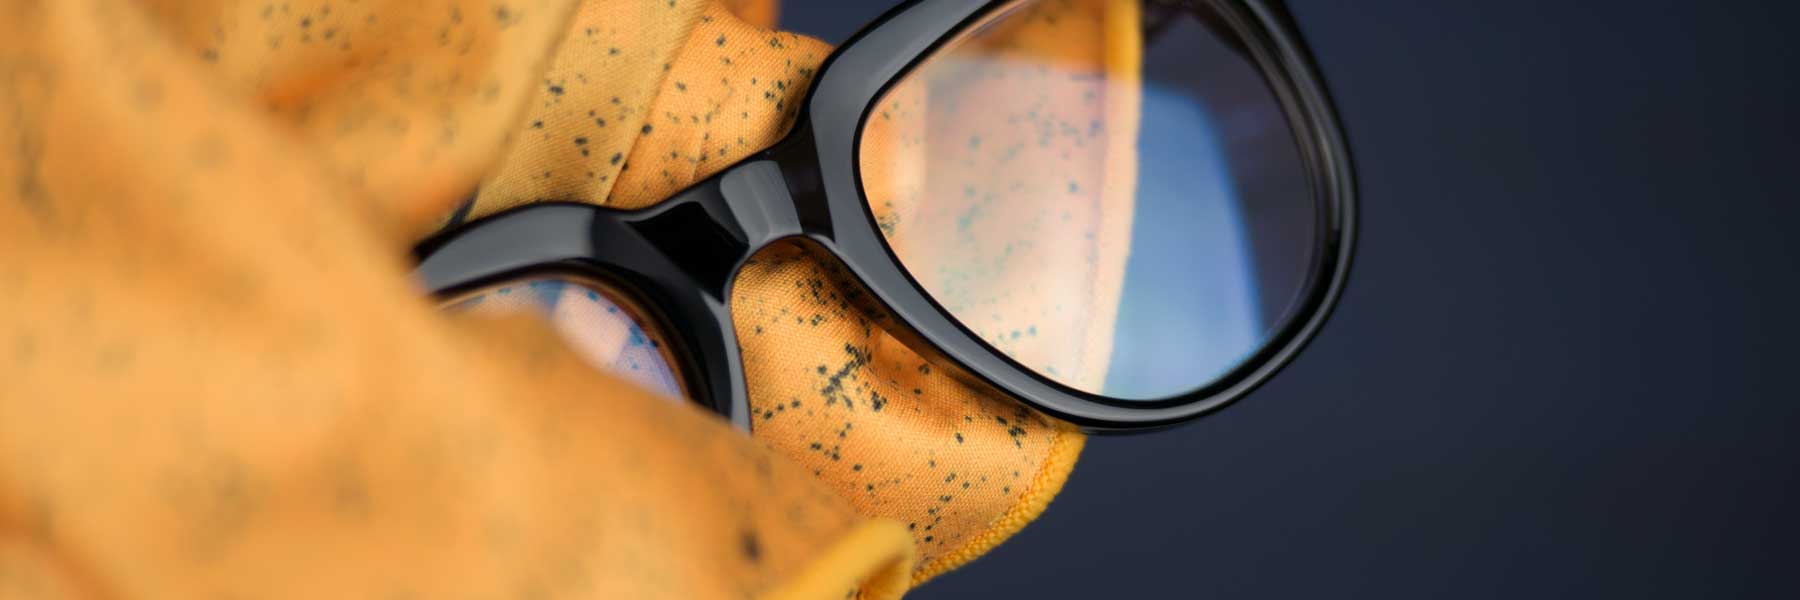 Mini Sunglasses Glasses Microfiber Glasses Cleaner Soft Fabric